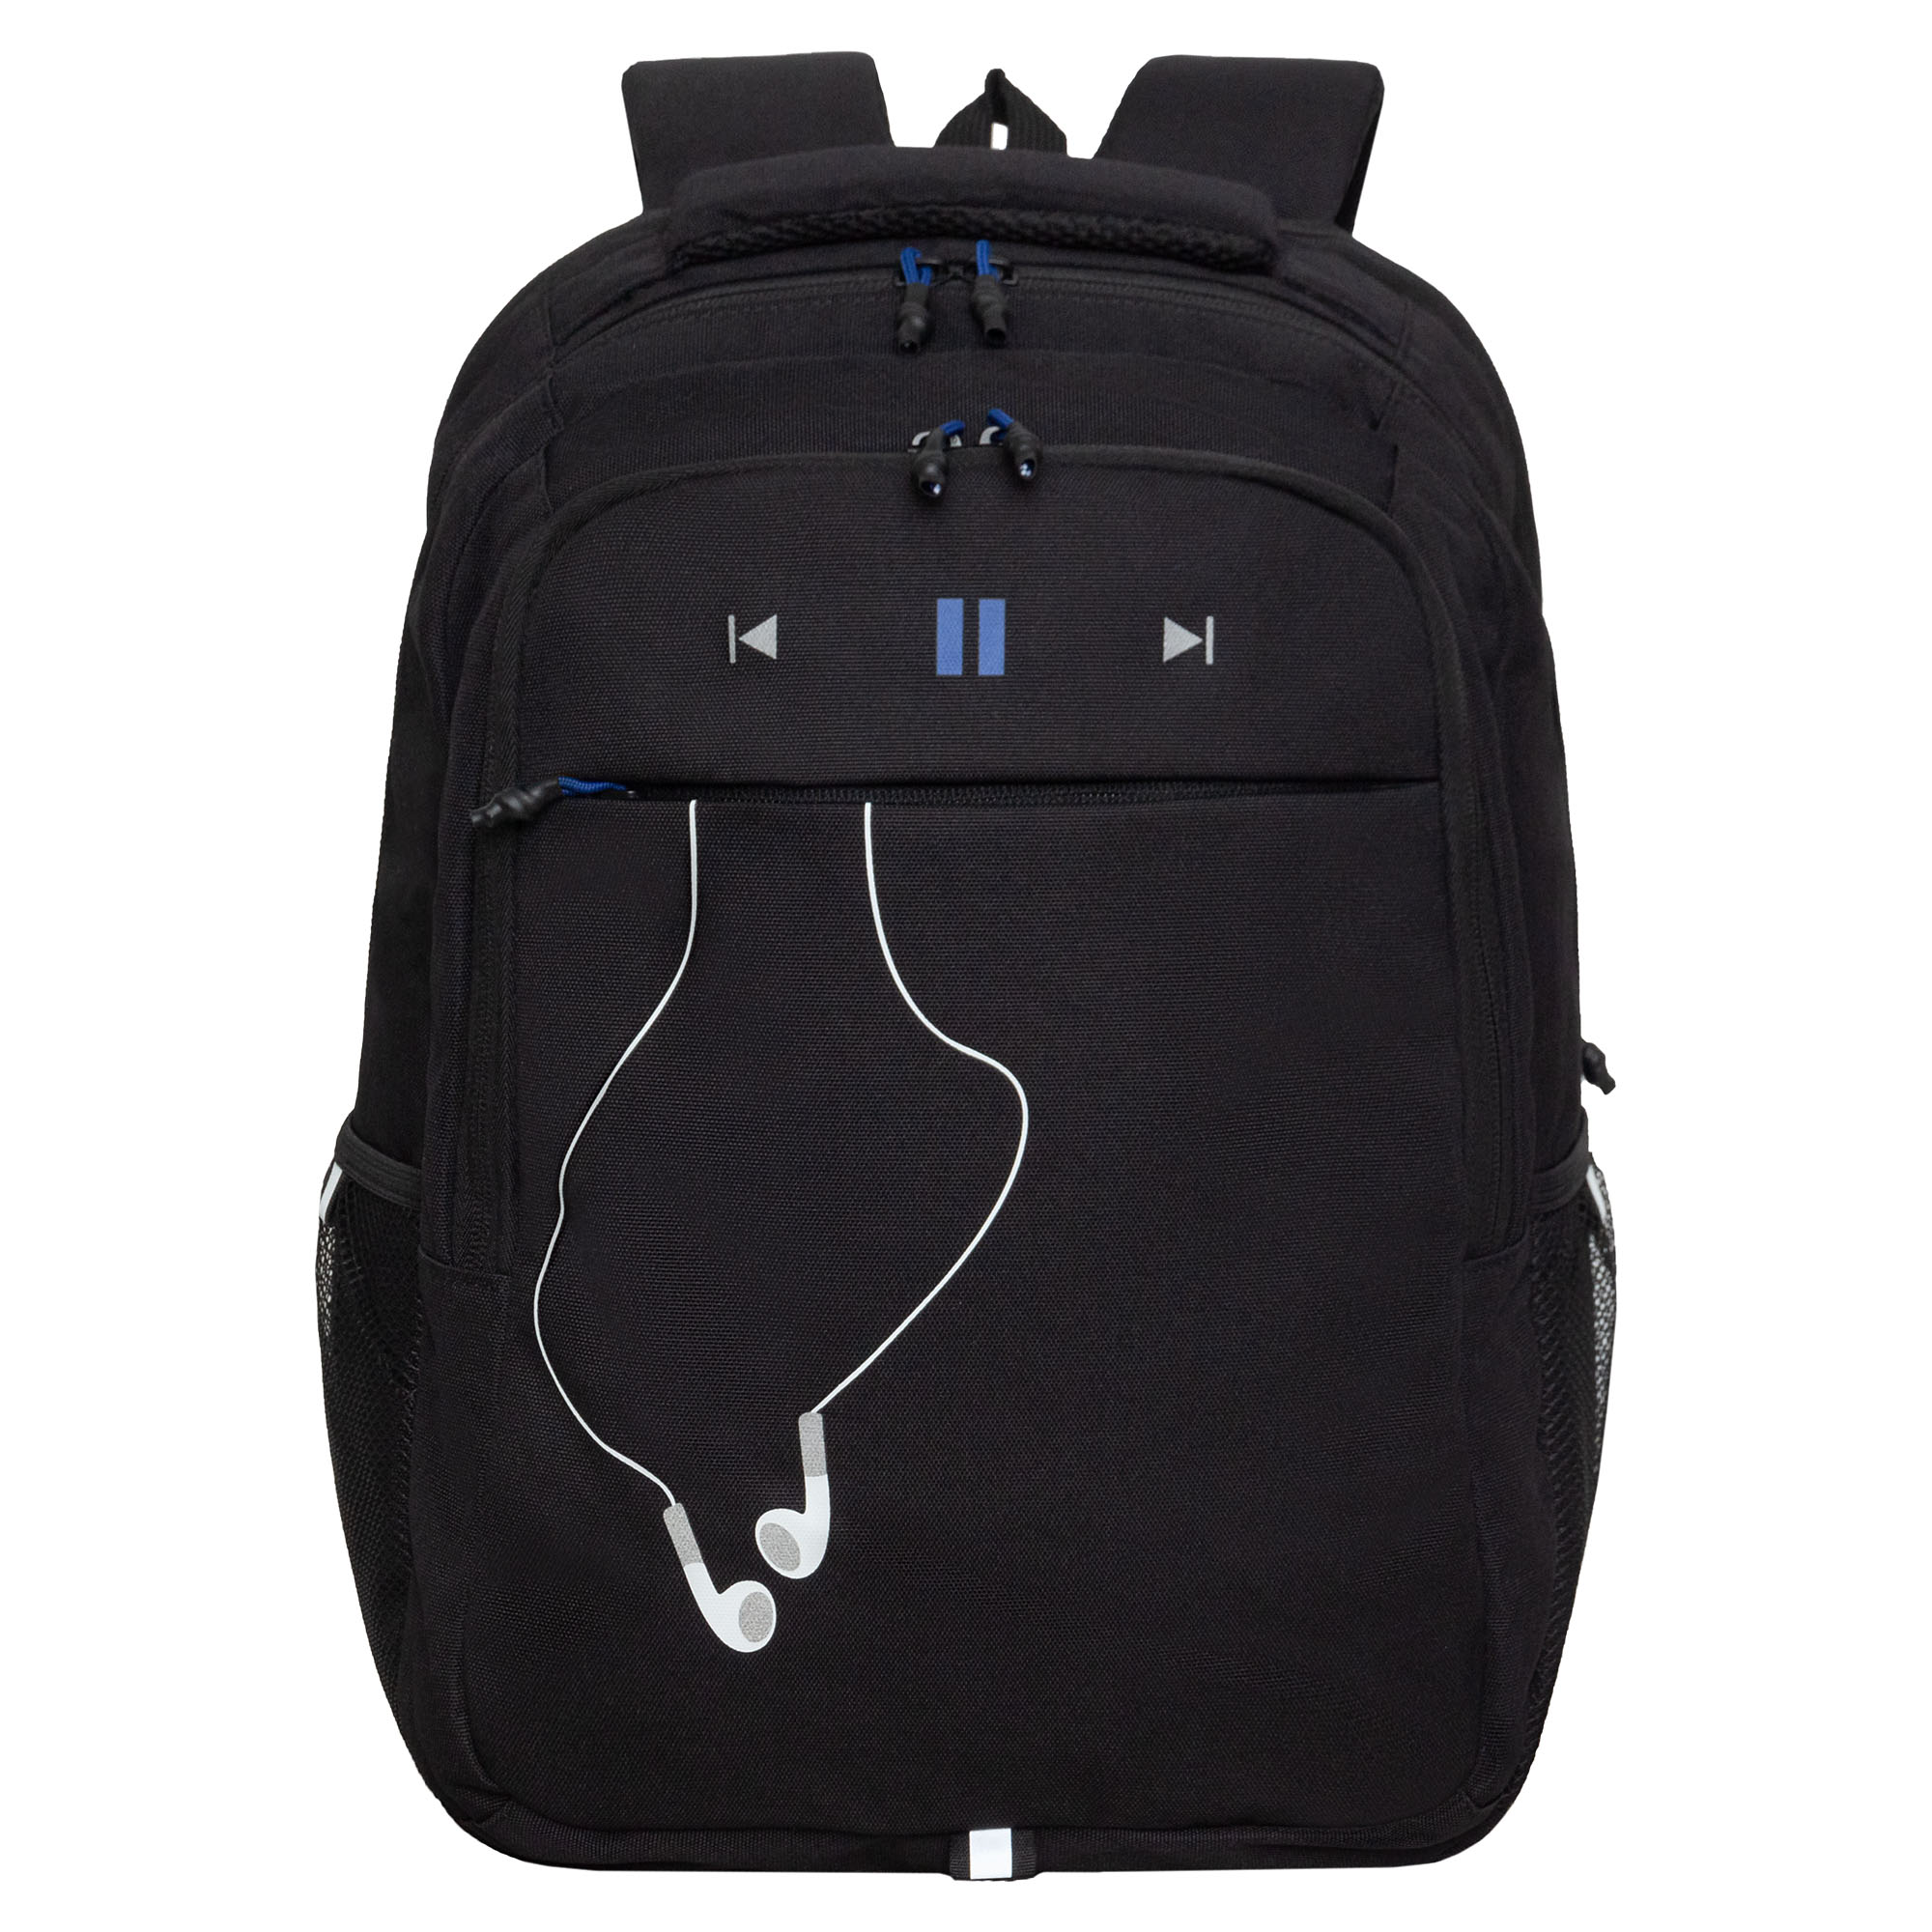 Рюкзак молодежный Grizzly с карманом для ноутбука 15, RU-432-4/3, черный, синий рюкзак молодежный отд на молнии н карман синий 42 х 31 х 15 см